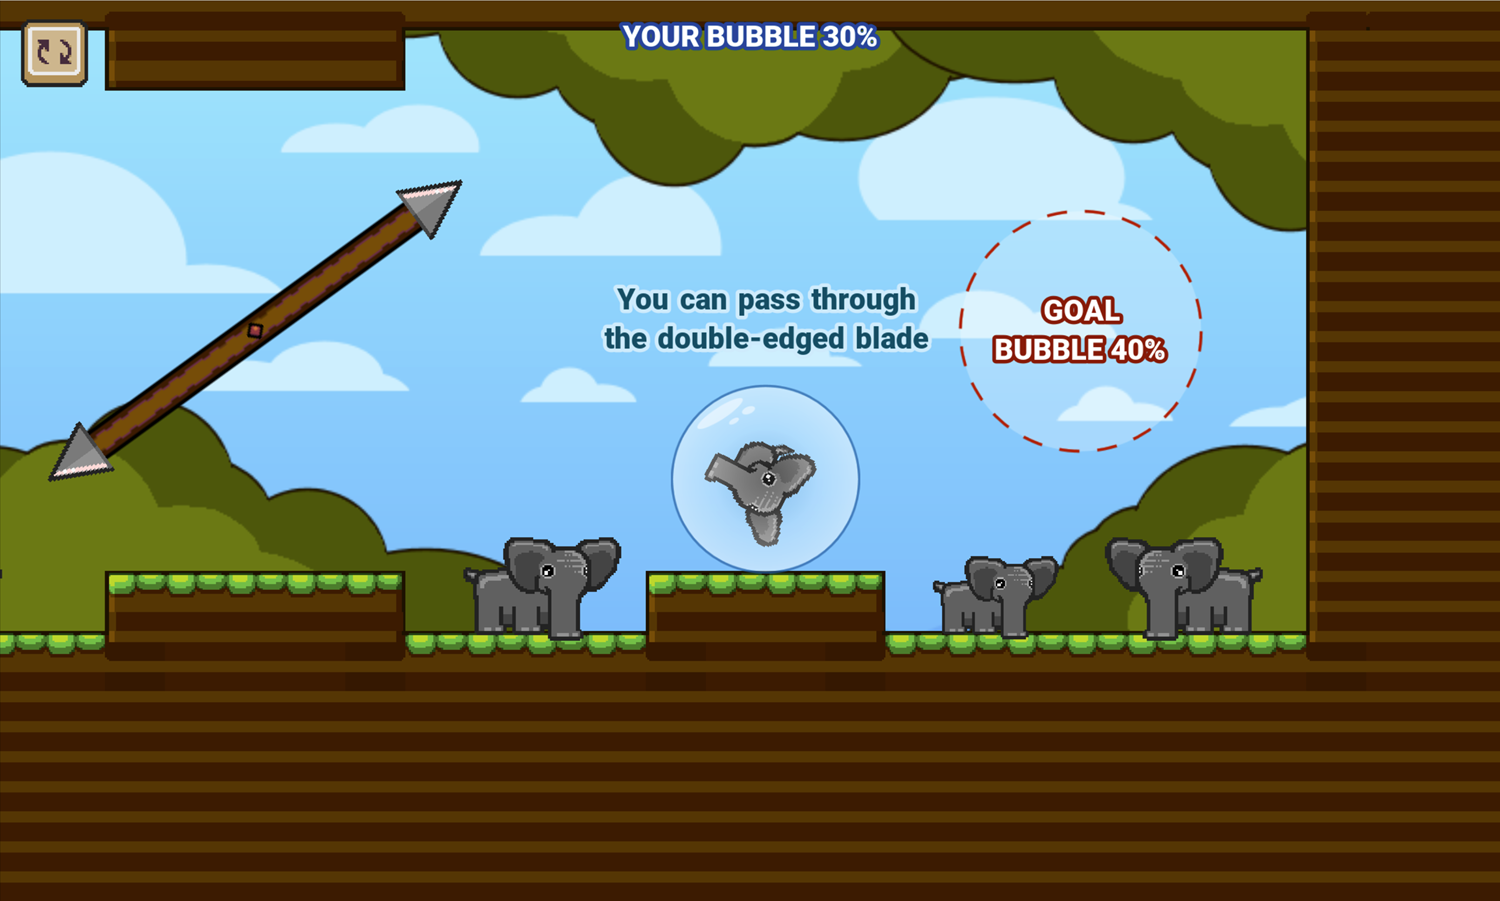 Heliumphant Game Pass Through Double Edge Blade Instructions Screen Screenshot.